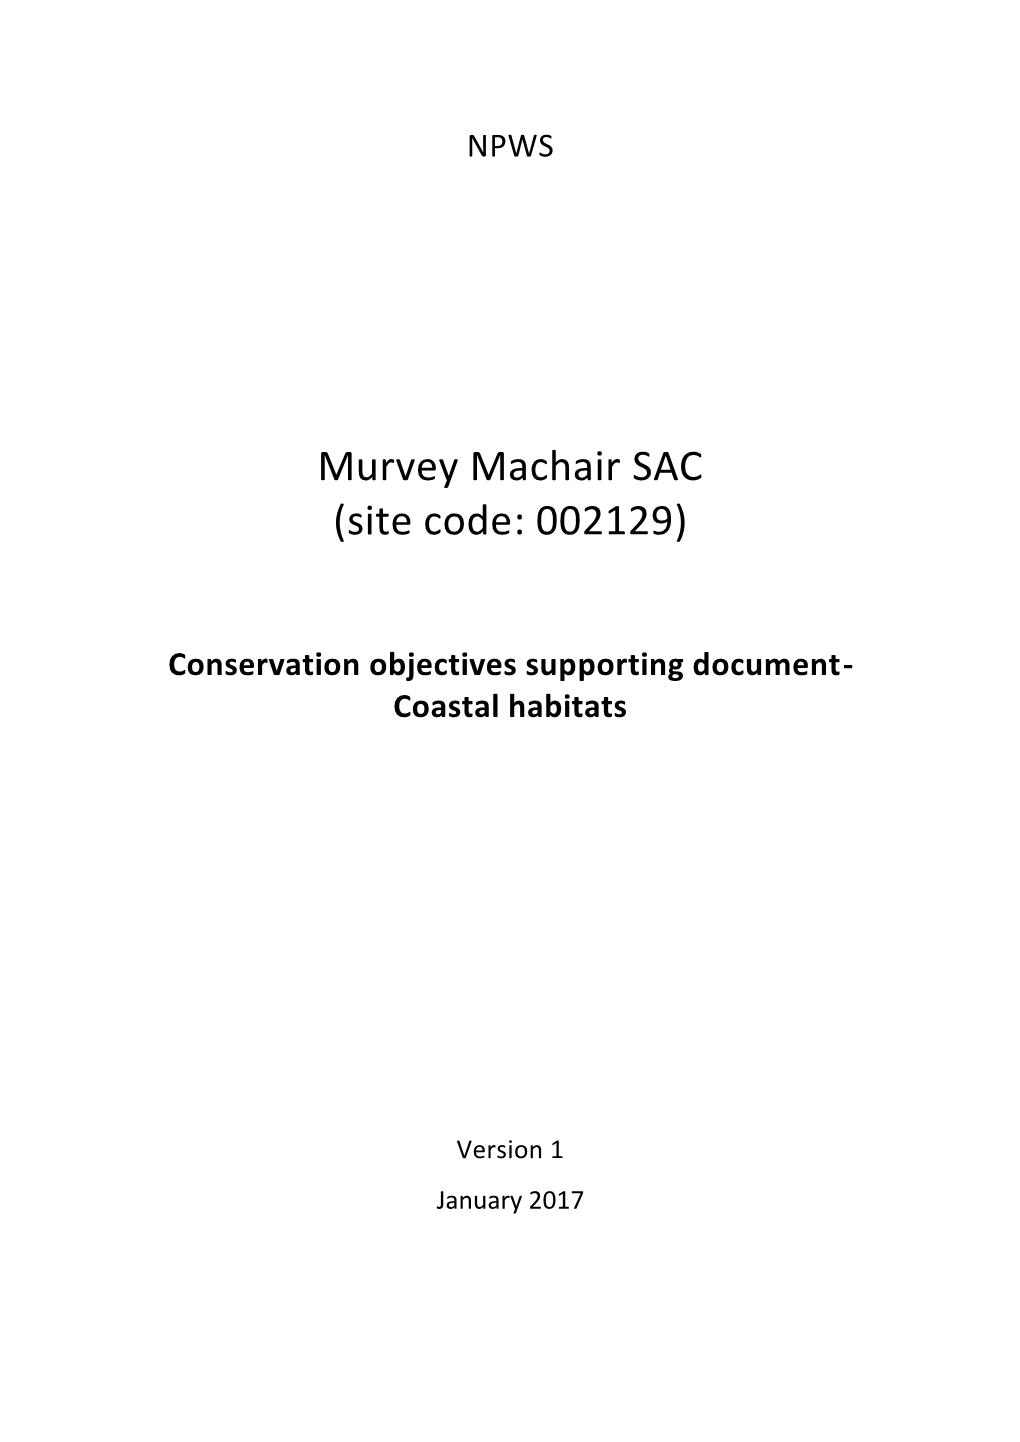 Murvey Machair SAC (Site Code: 002129)